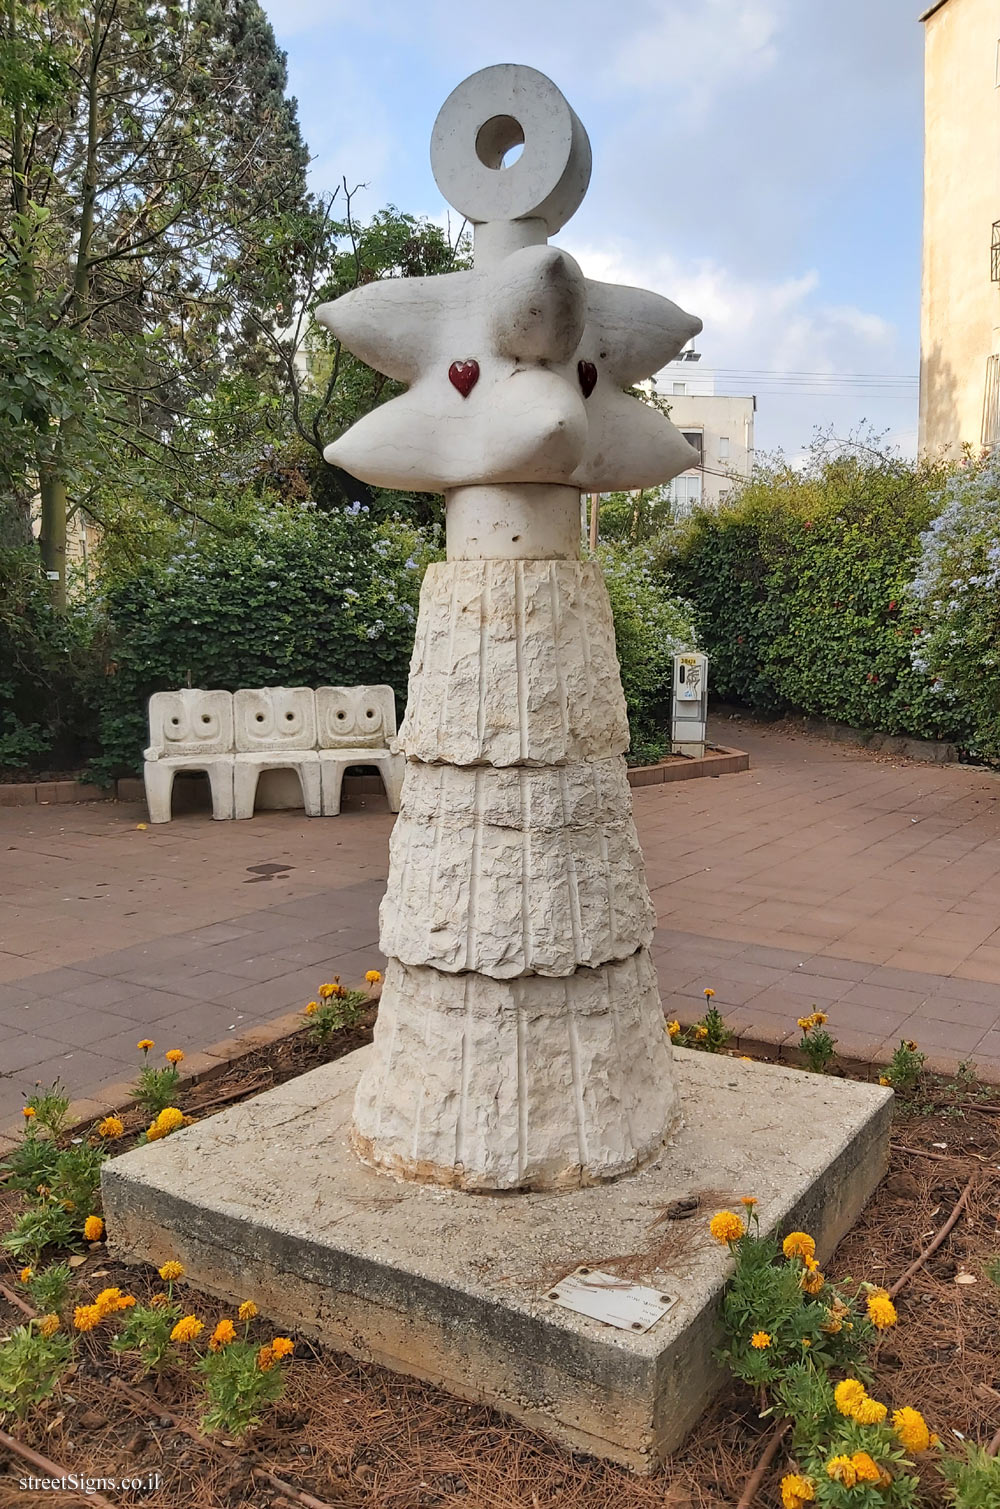 Holon - Woman Garden - "Giving" - Tanya Preminger’s outdoor sculpture - Mikve Yisrael St 4, Holon, Israel